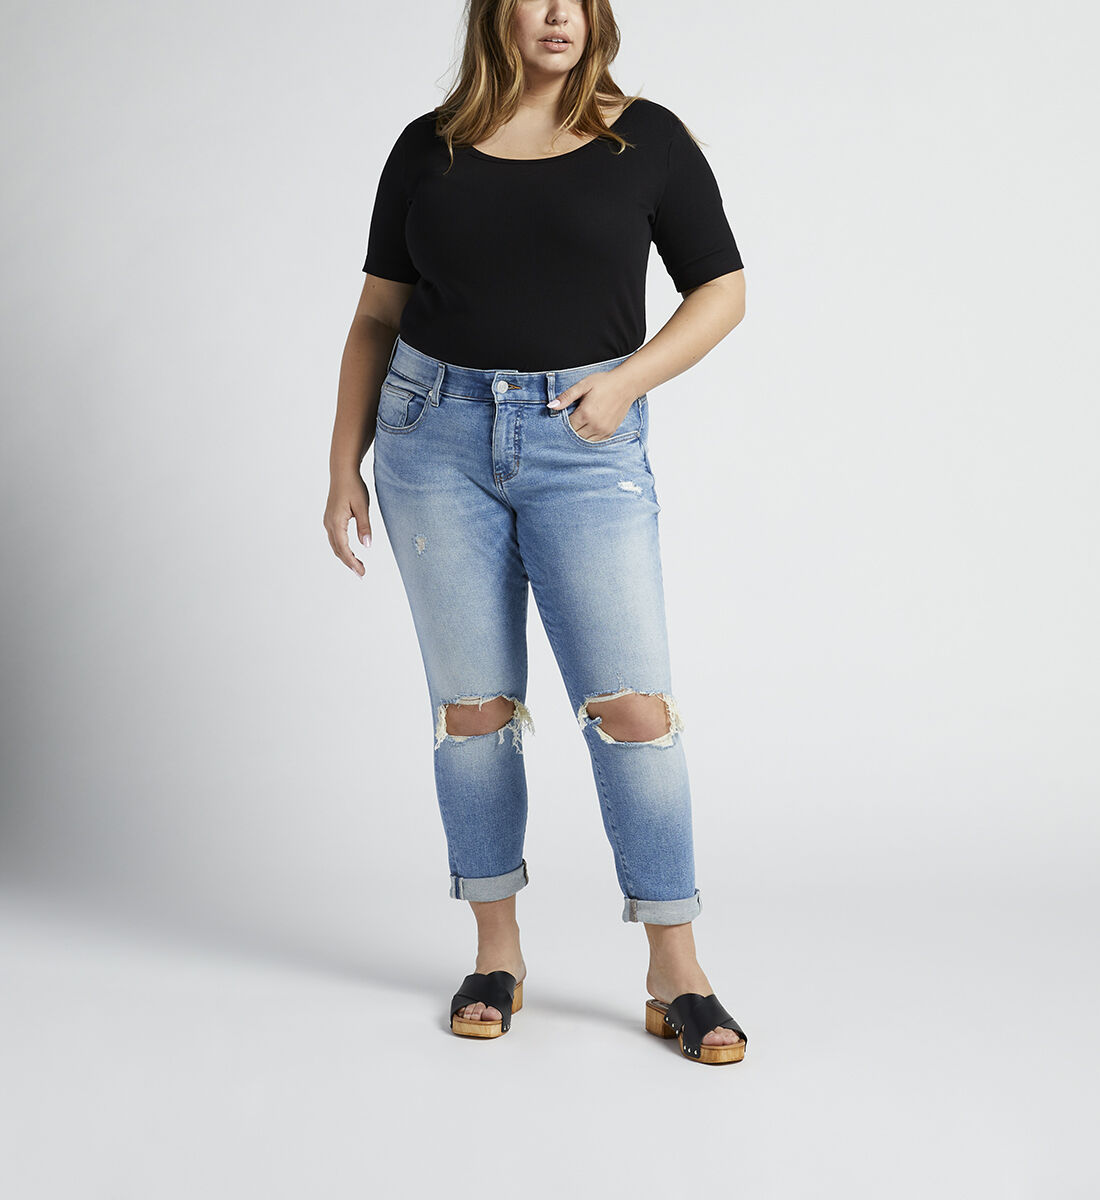 Carter Mid Rise Girlfriend Jeans Plus Size Front